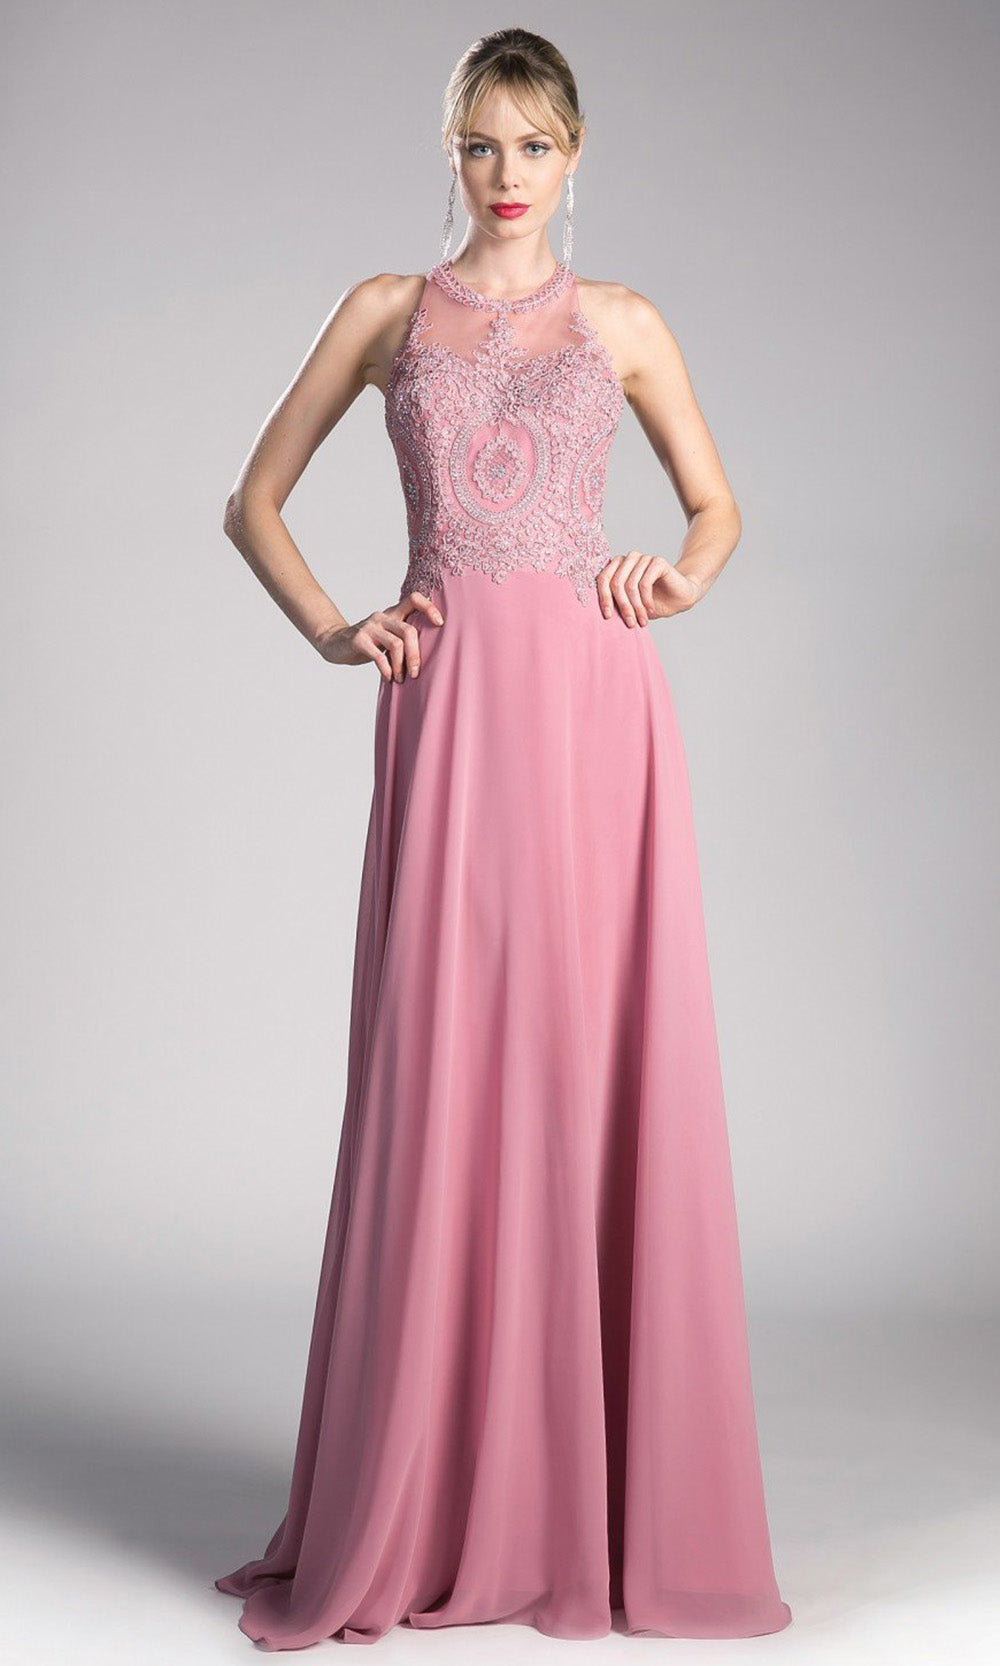 Ladivine - UJ0120 Illusion Applique A-Line Gown In Pink